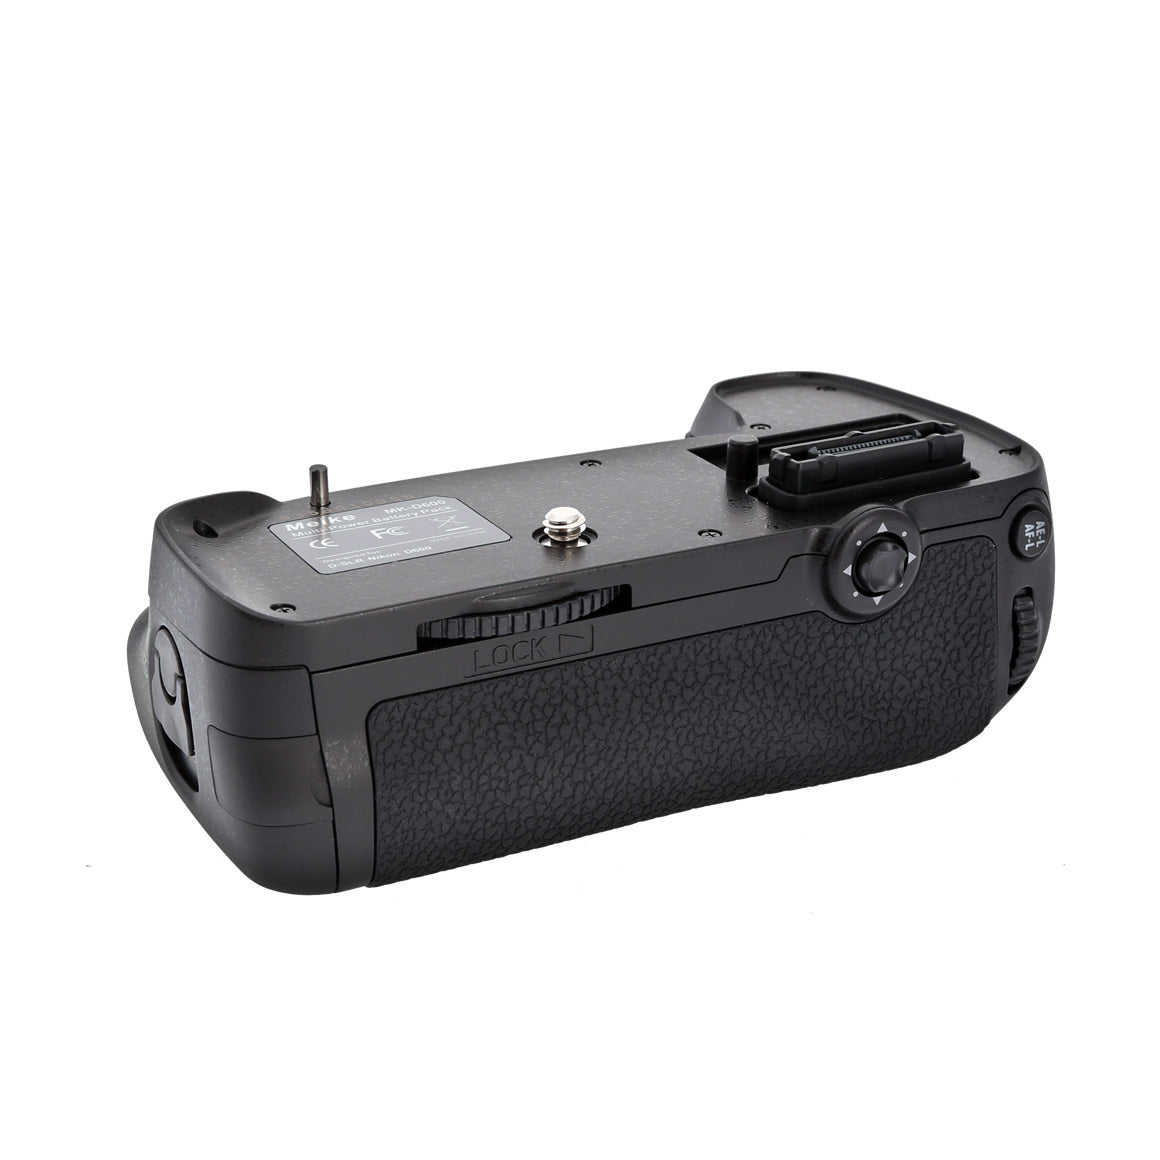 Meike MK-D600 Vertical Shooting Battery Grip For Nikon D600, D610 DSLR Camera, Compatible with EN-EL15 Battery | Nikon MB-D14 Replacement